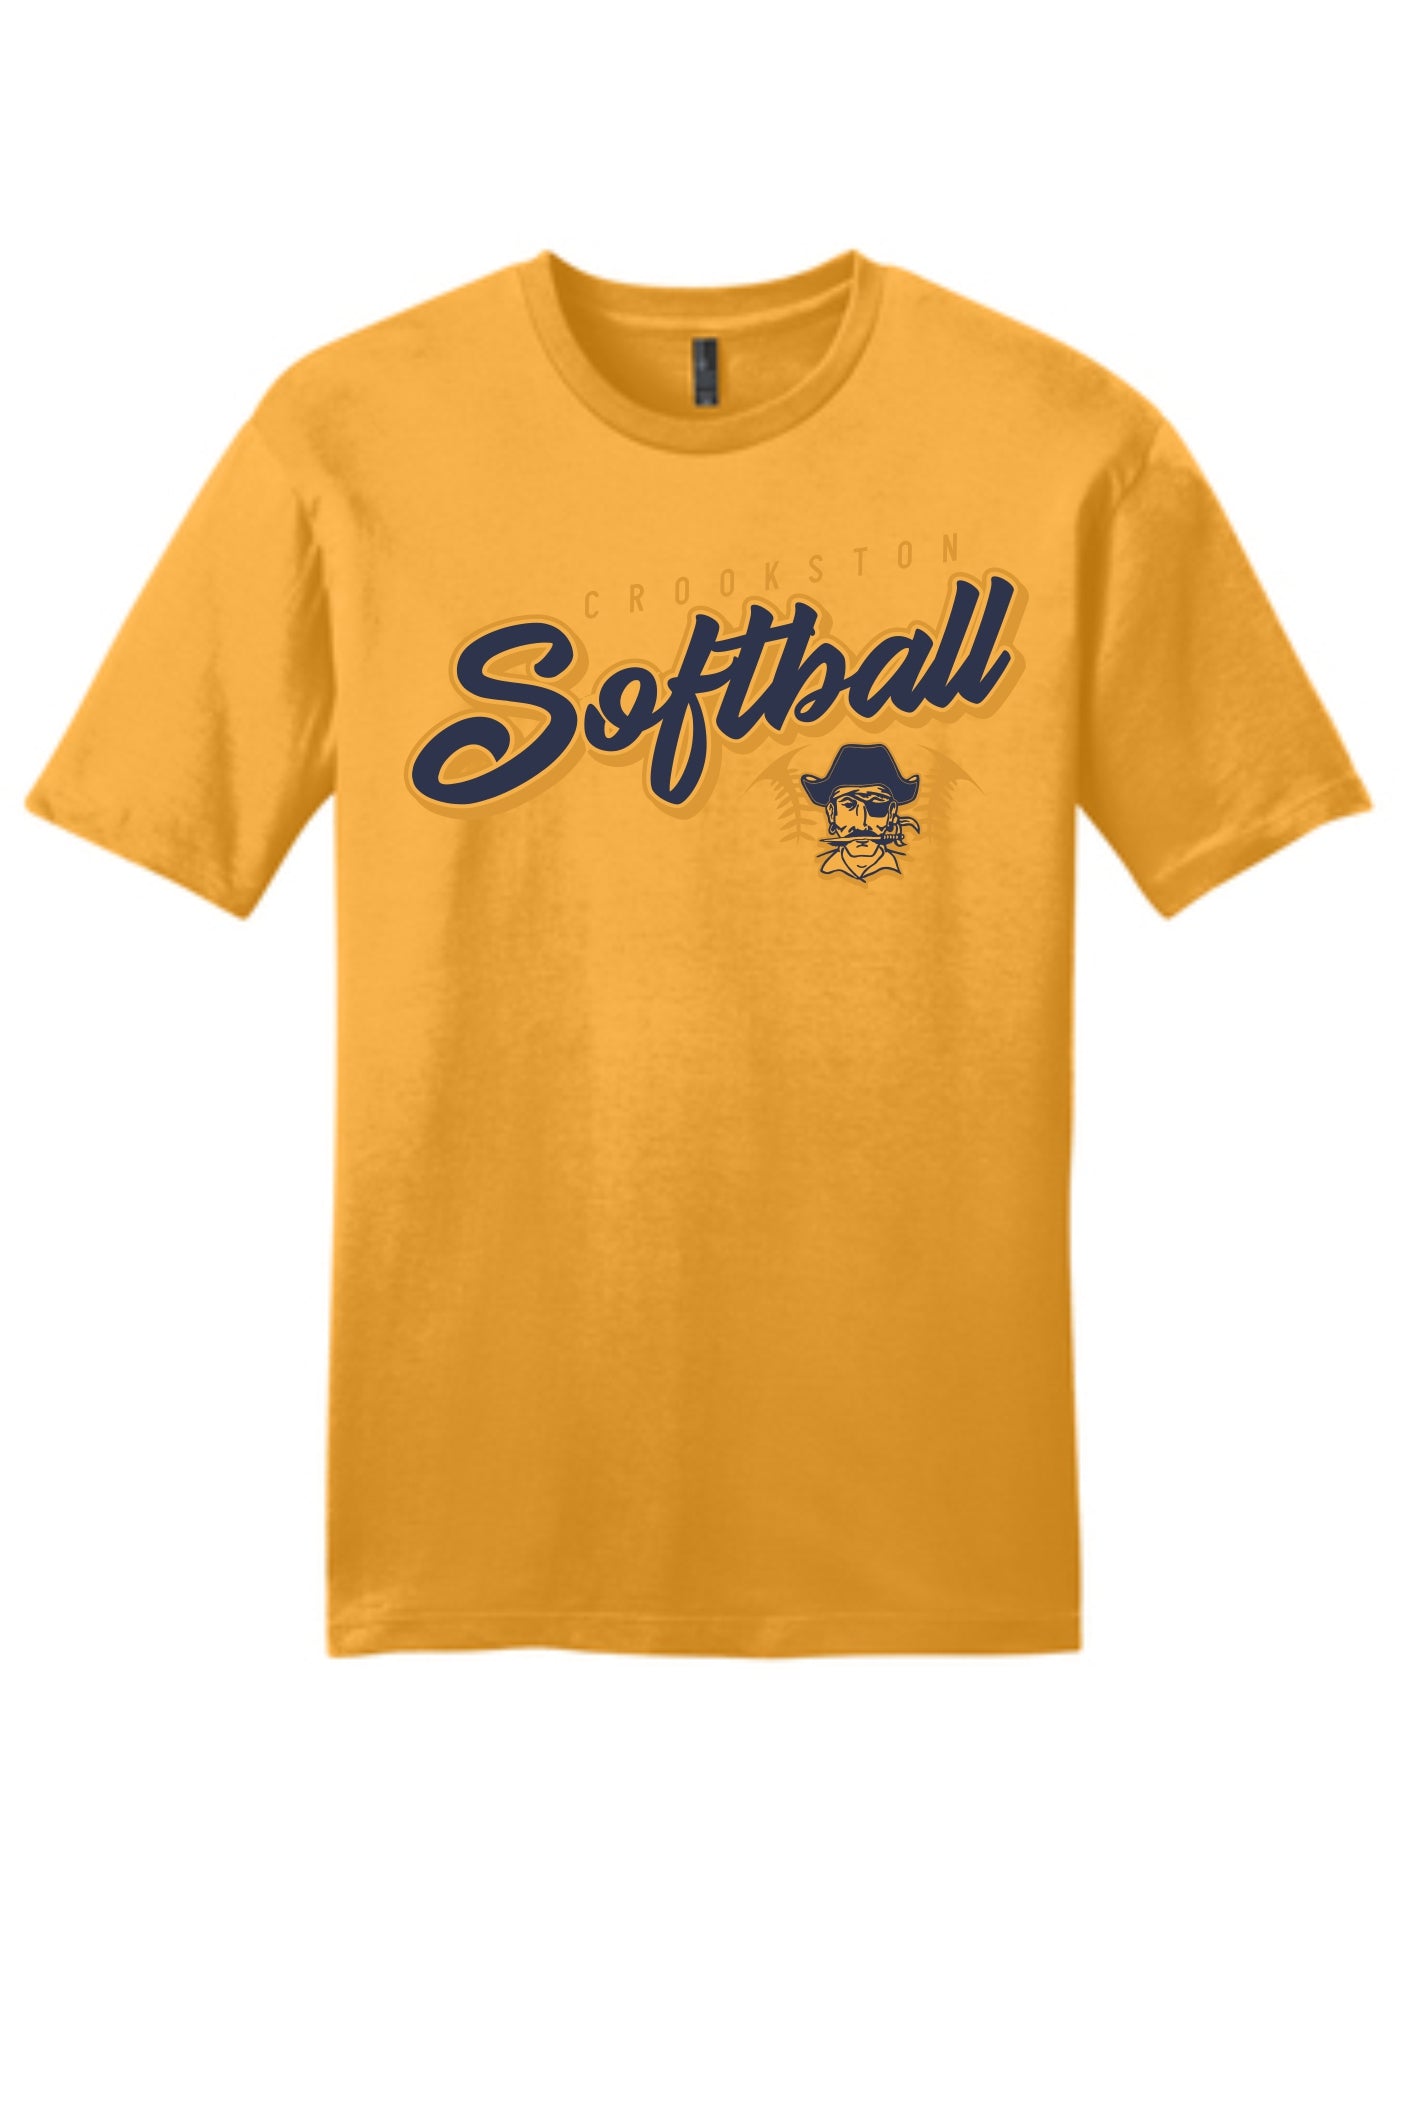 Pirate Softball -- Short Sleeve Shirt